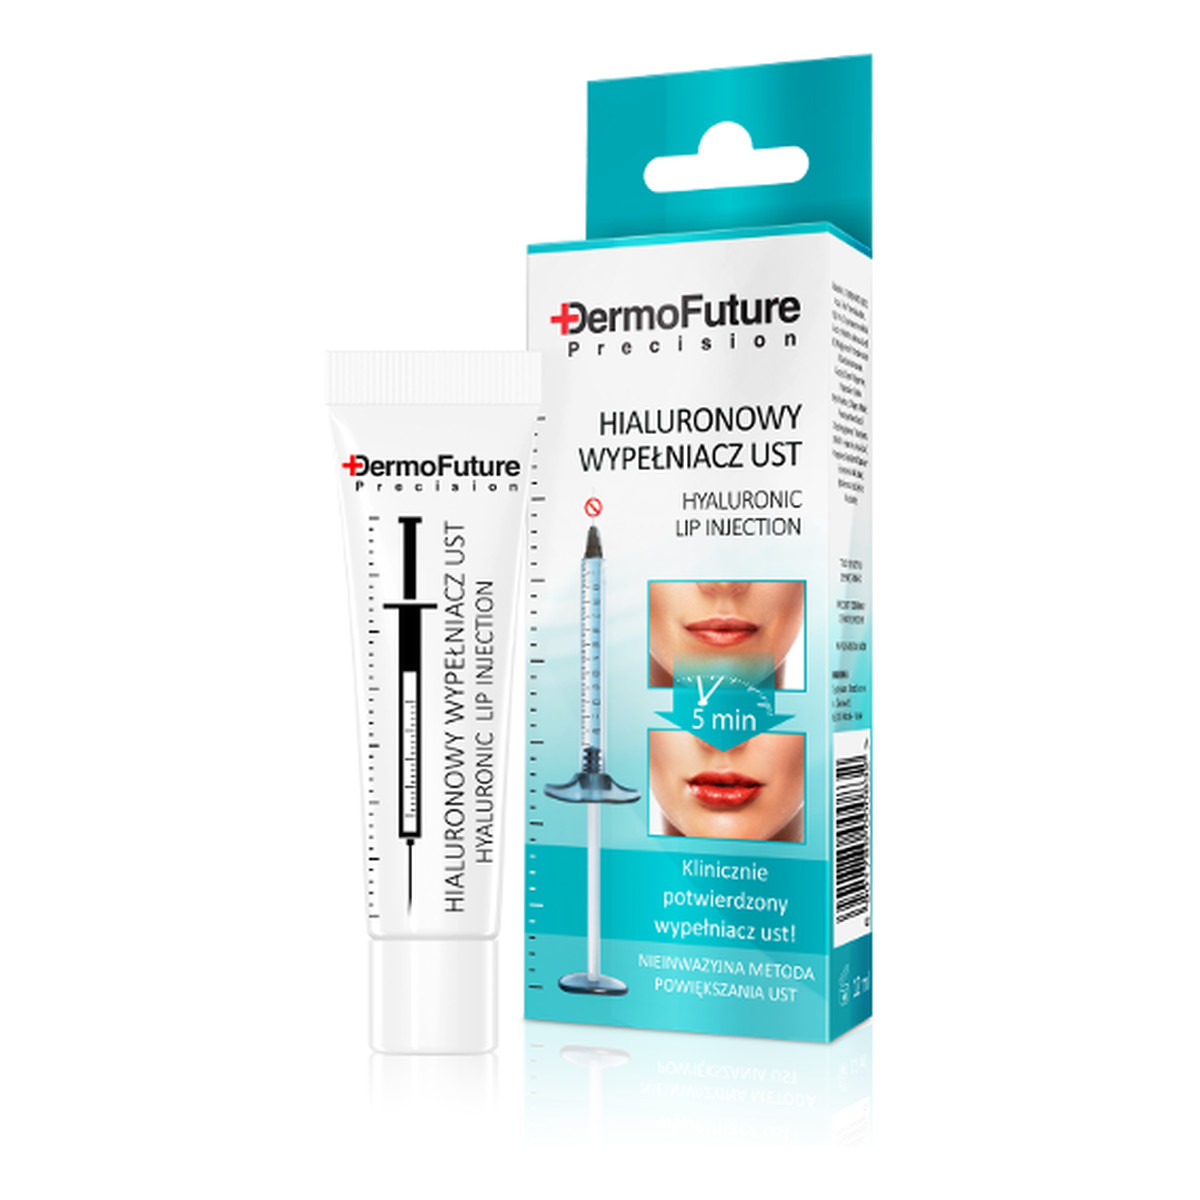 DermoFuture Hyaluronic Lip Injection Hialuronowy Wypełniacz Ust 12ml